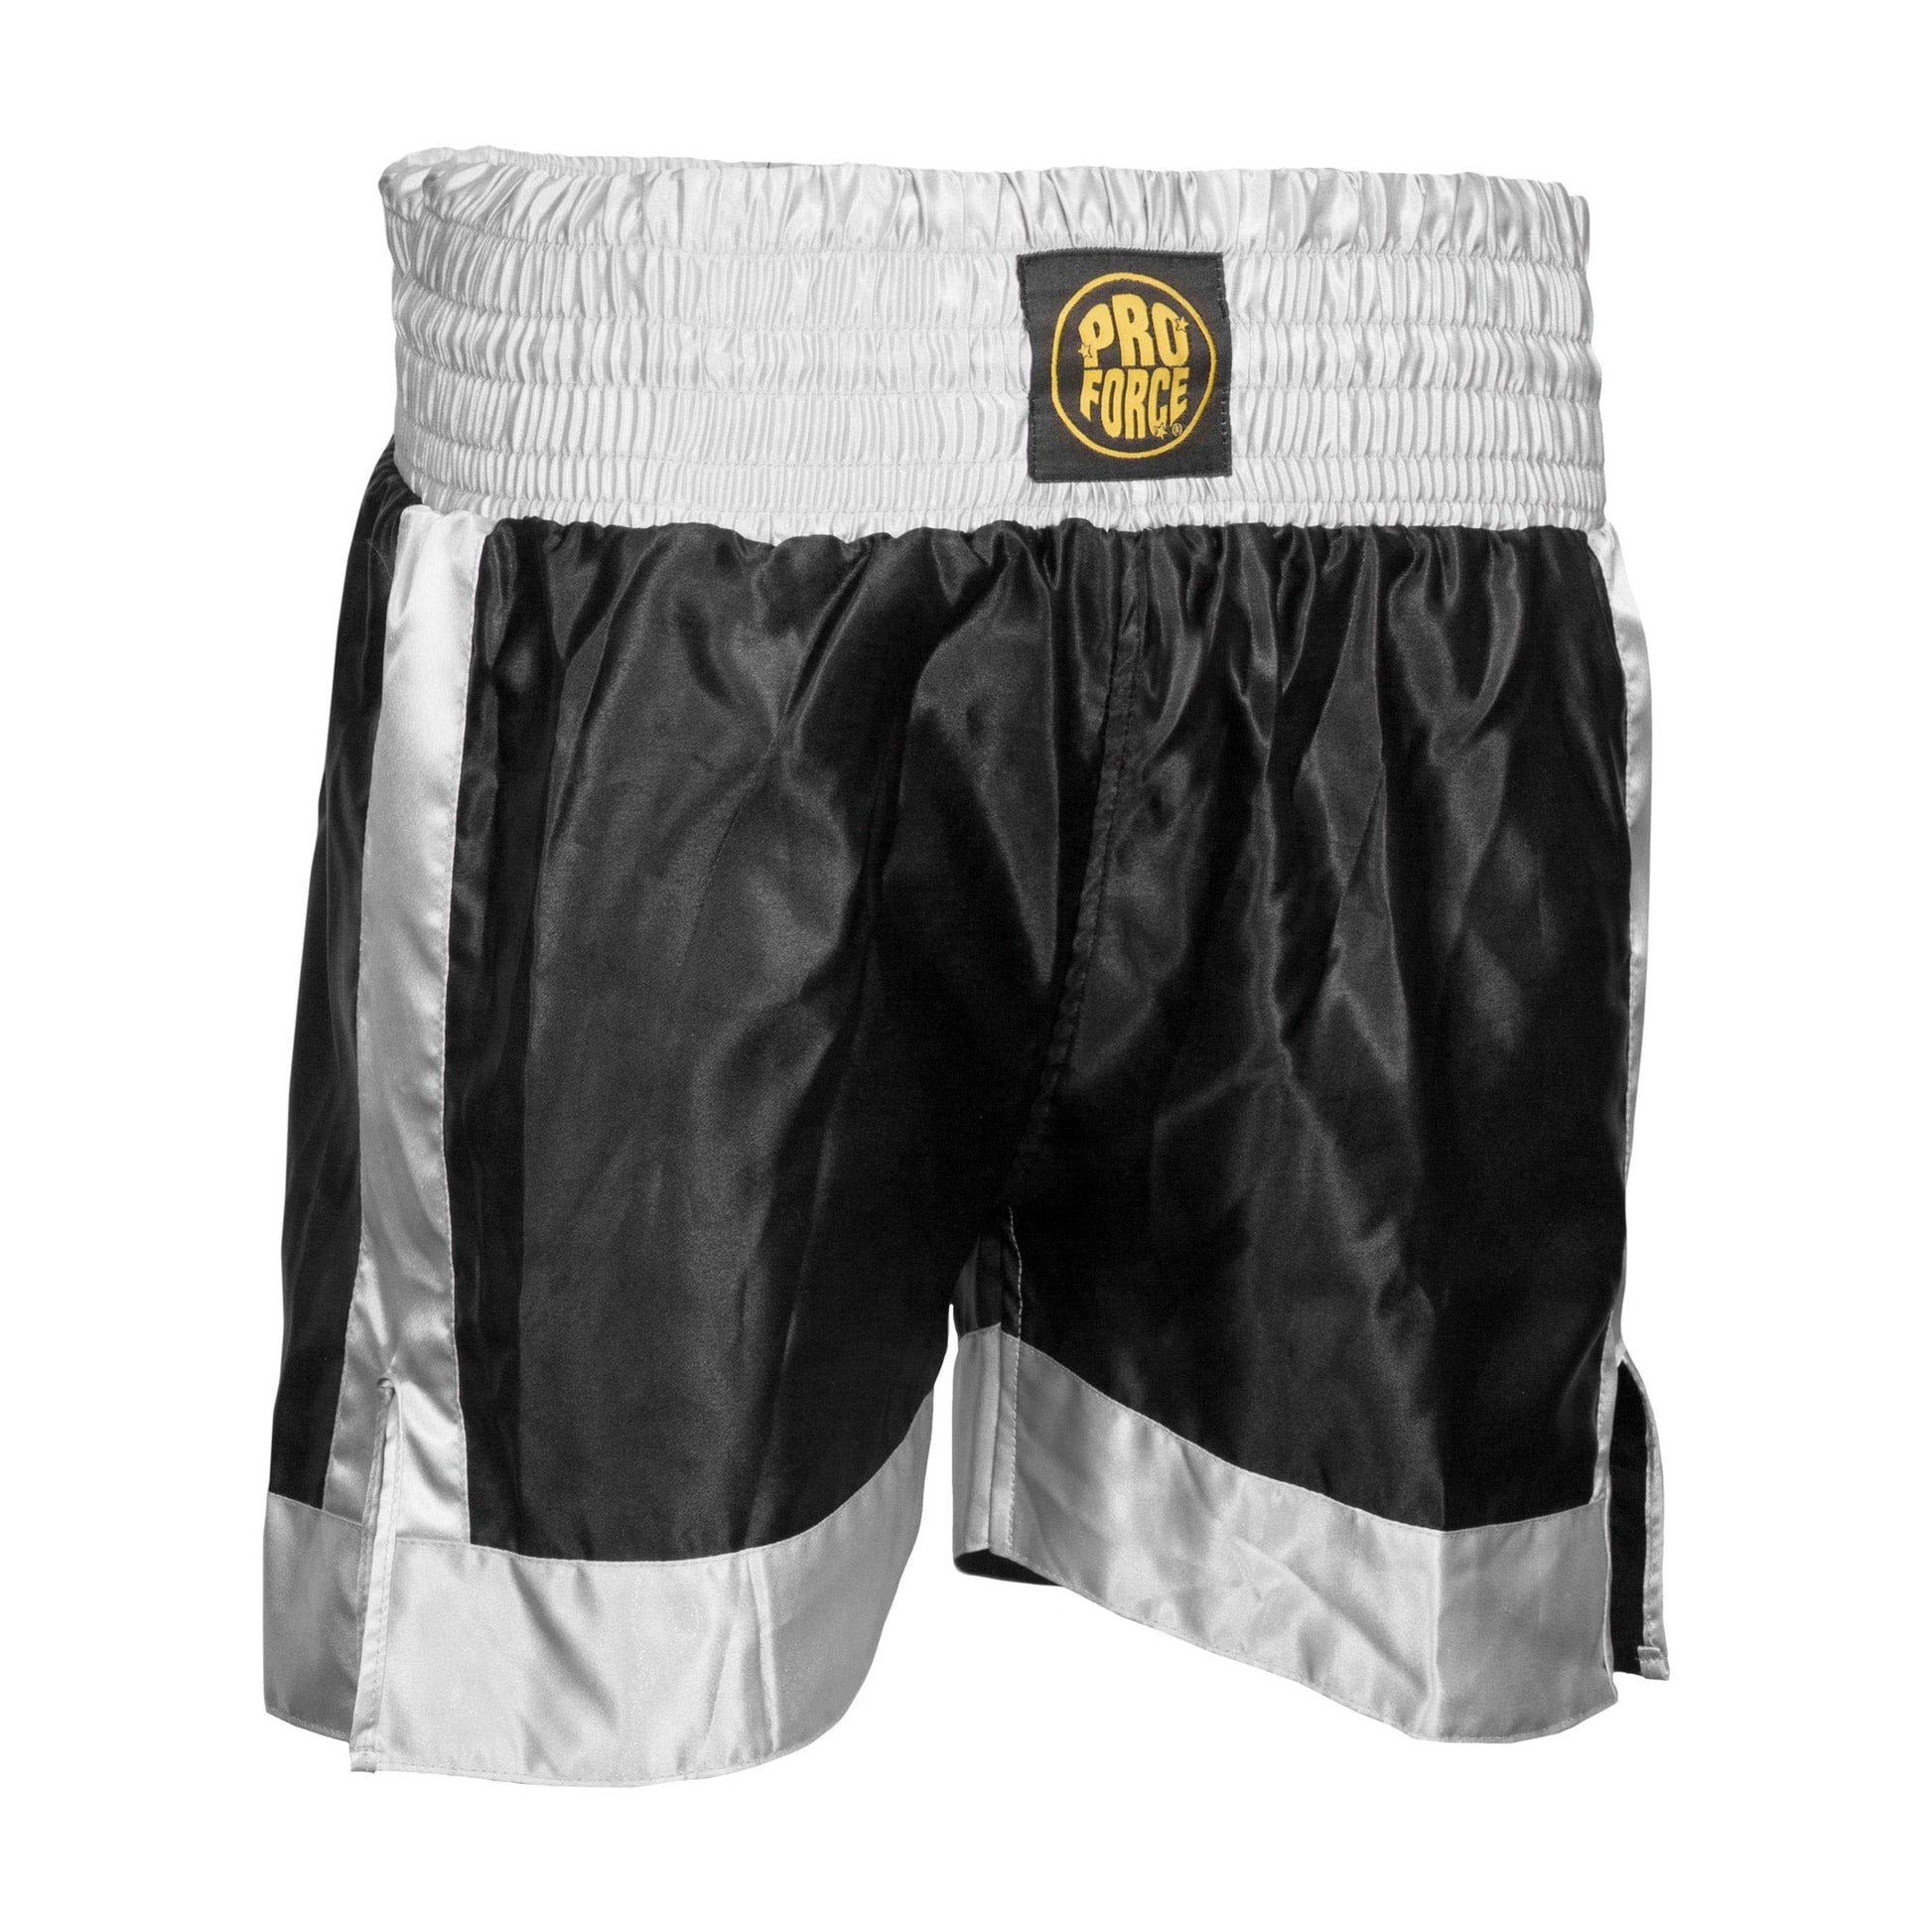 ProForce sporting goods ProForce Thunder Satin Boxing Trunk kickboxing shorts